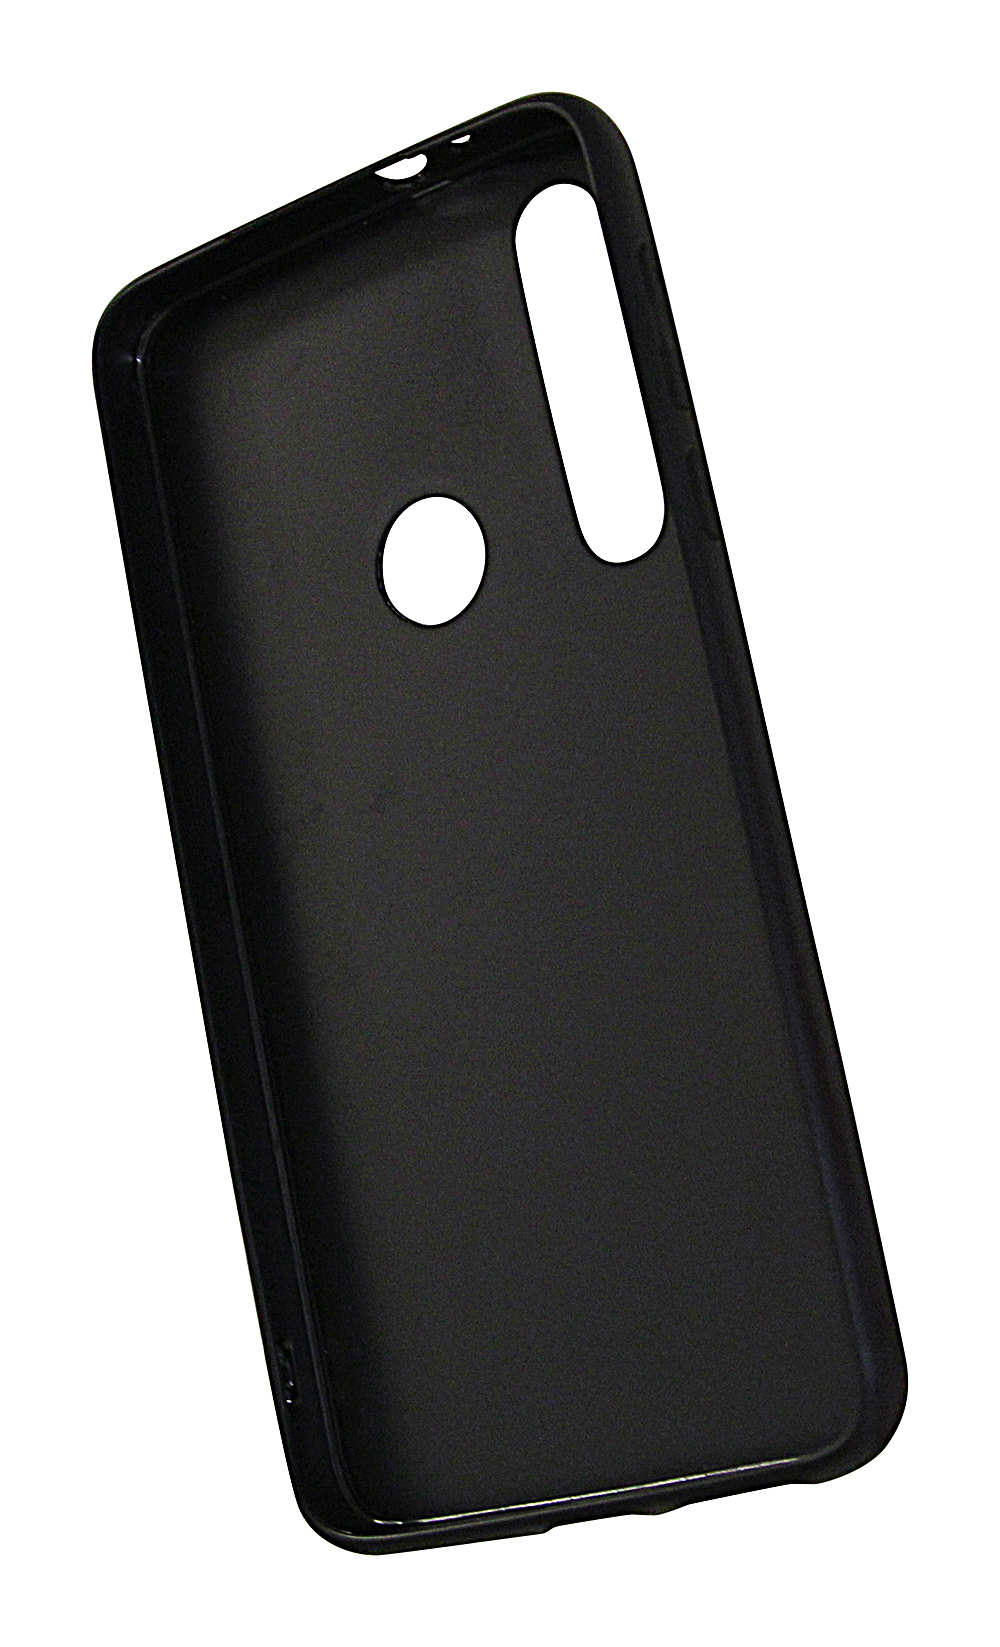 Skimblocker XL Magnet Wallet Motorola One Macro